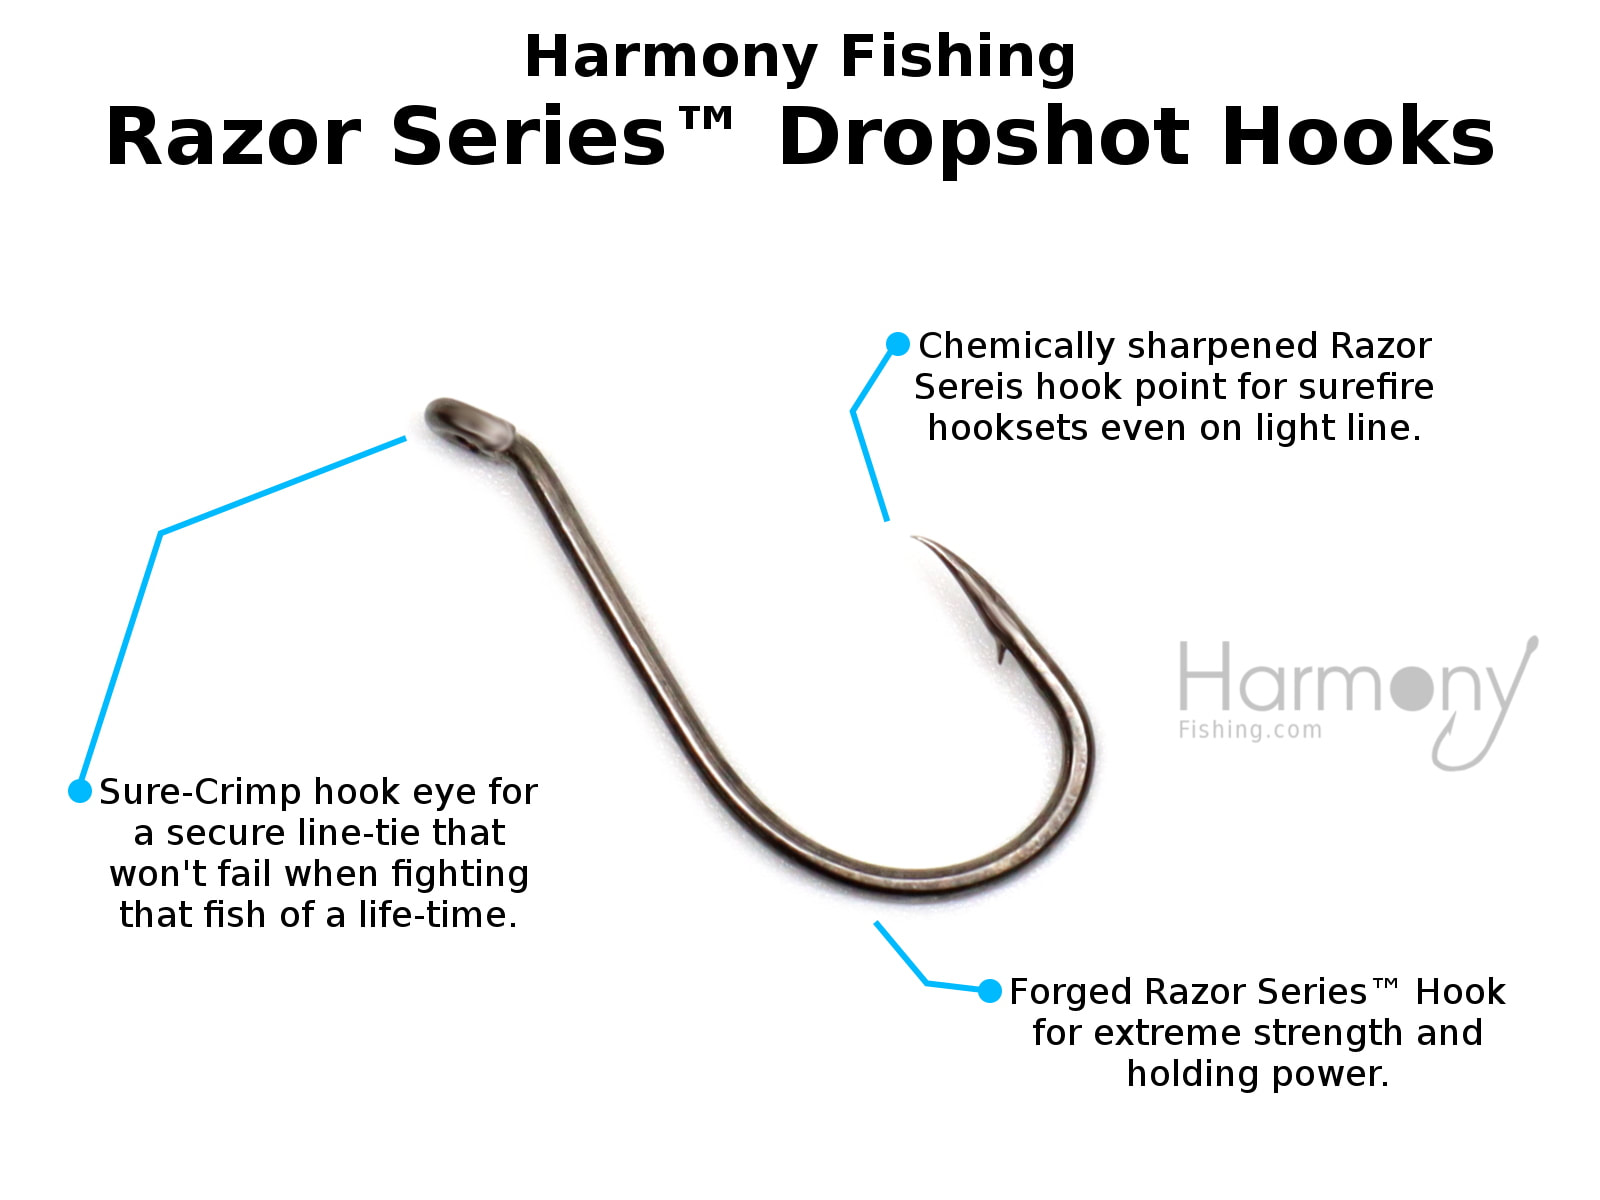 Razor Series DropShot Hooks